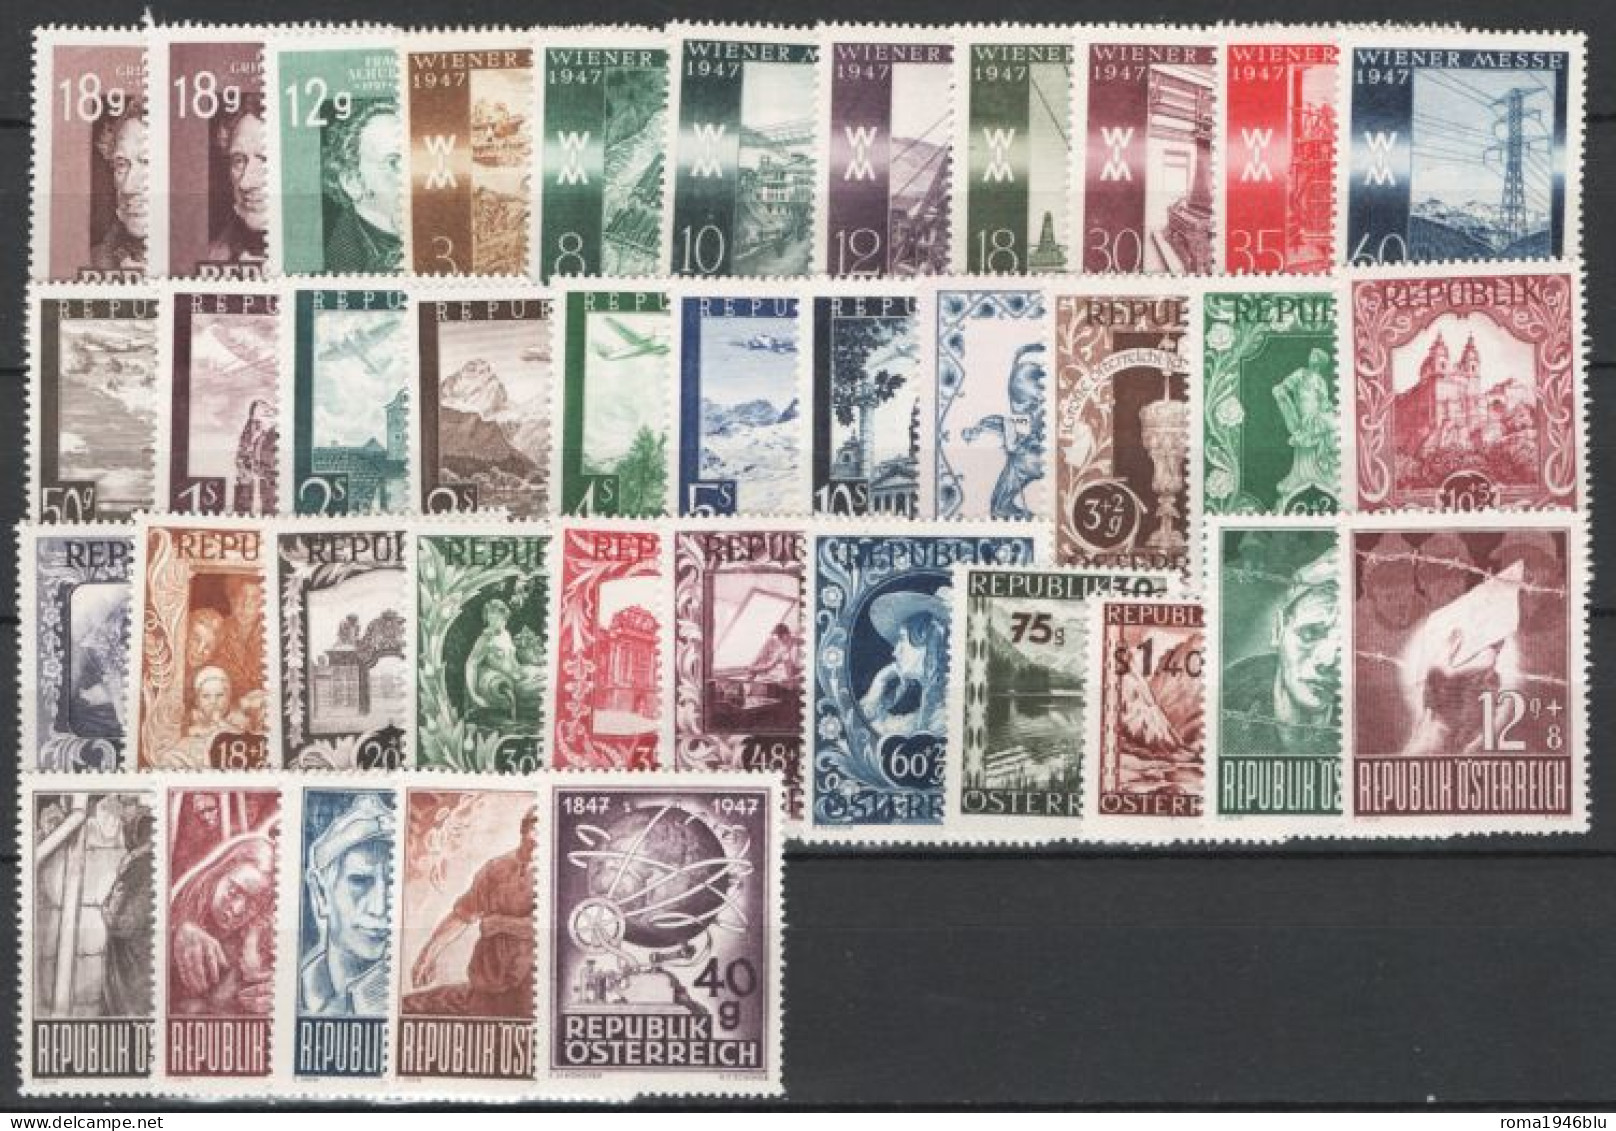 Austria 1947 Annata Completa Commemorativa  / Complete Commemorative Year Set **/MNH VF - Années Complètes